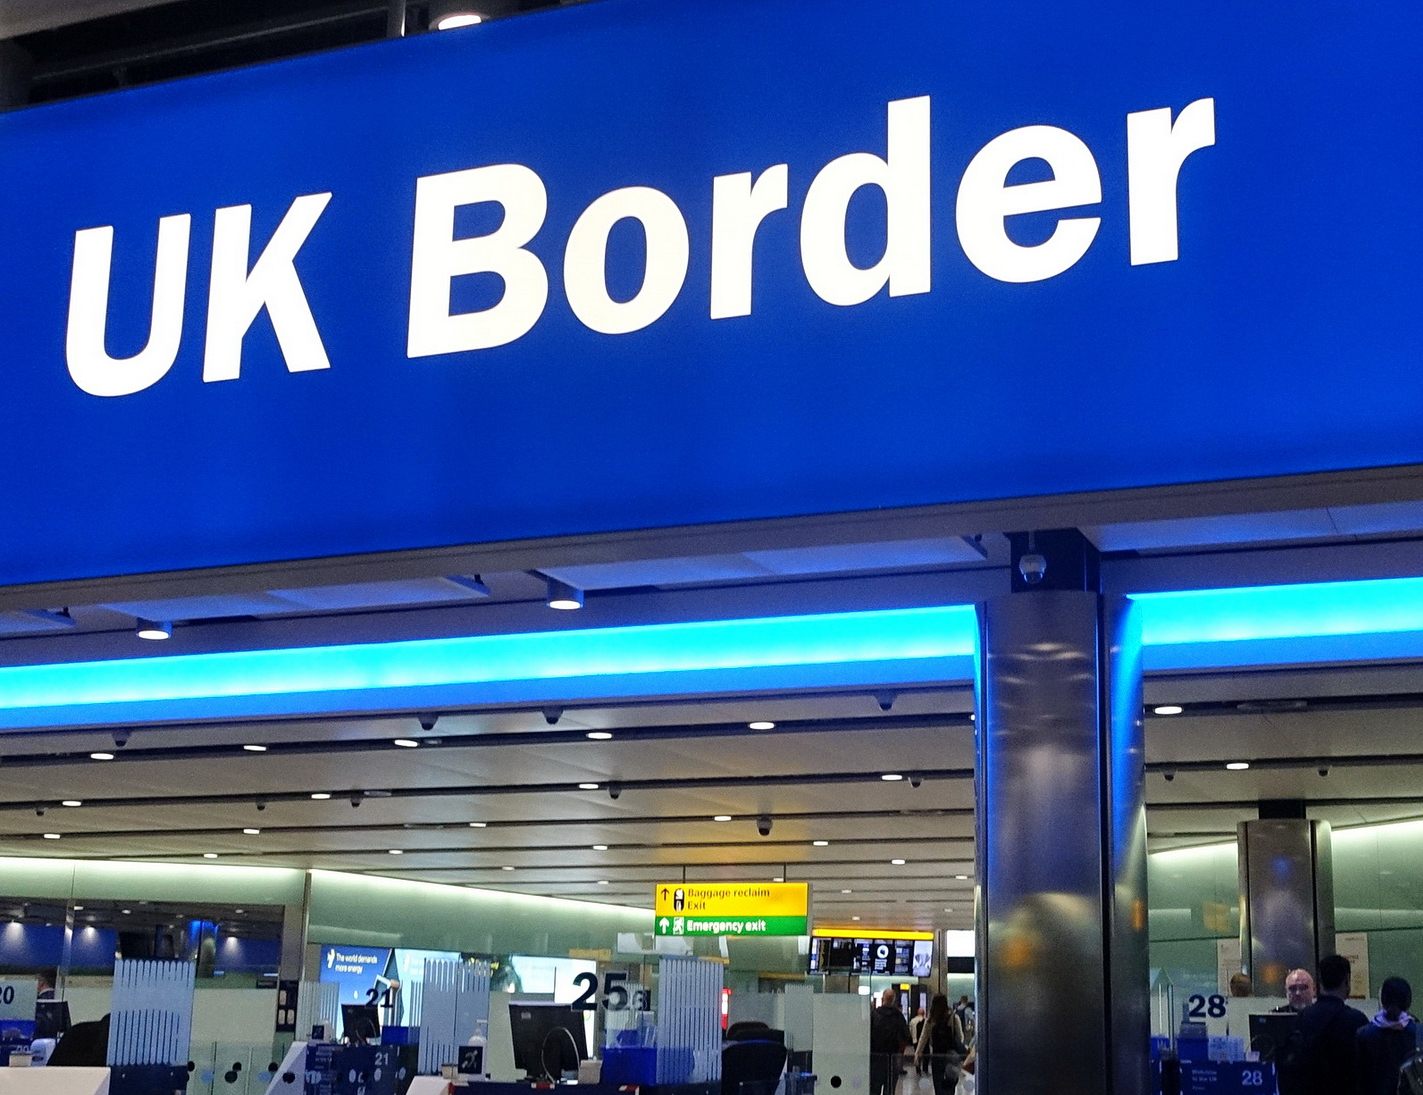 Brexit-like rhetoric on immigration no longer works